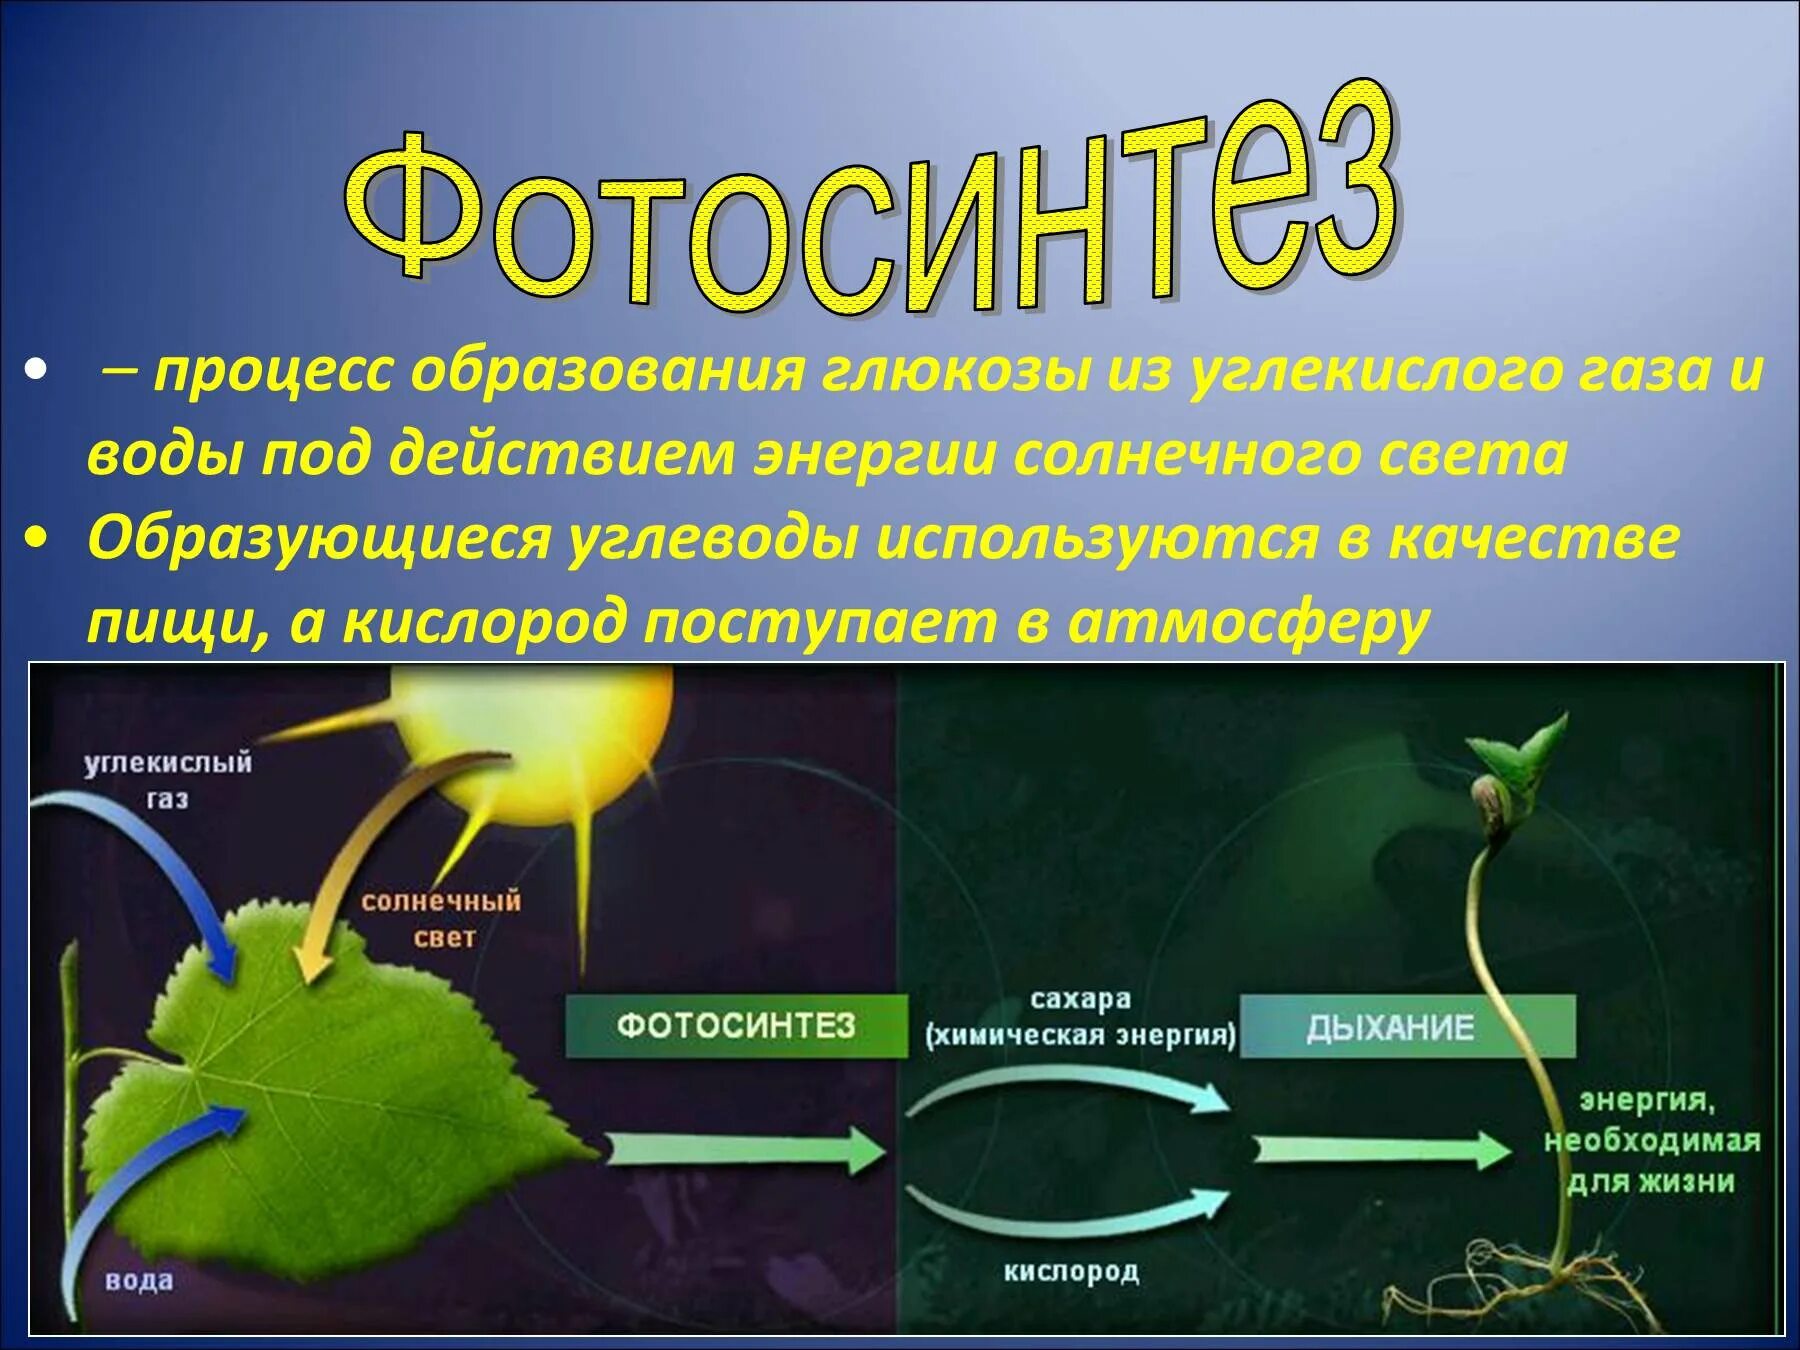 Ajnjcbyntp 6 rkfc ,bjkjubz. Образование Глюкозы в процессе фотосинтеза. 3 Стадии фотосинтеза. Фотосинтез 9 класс биология.